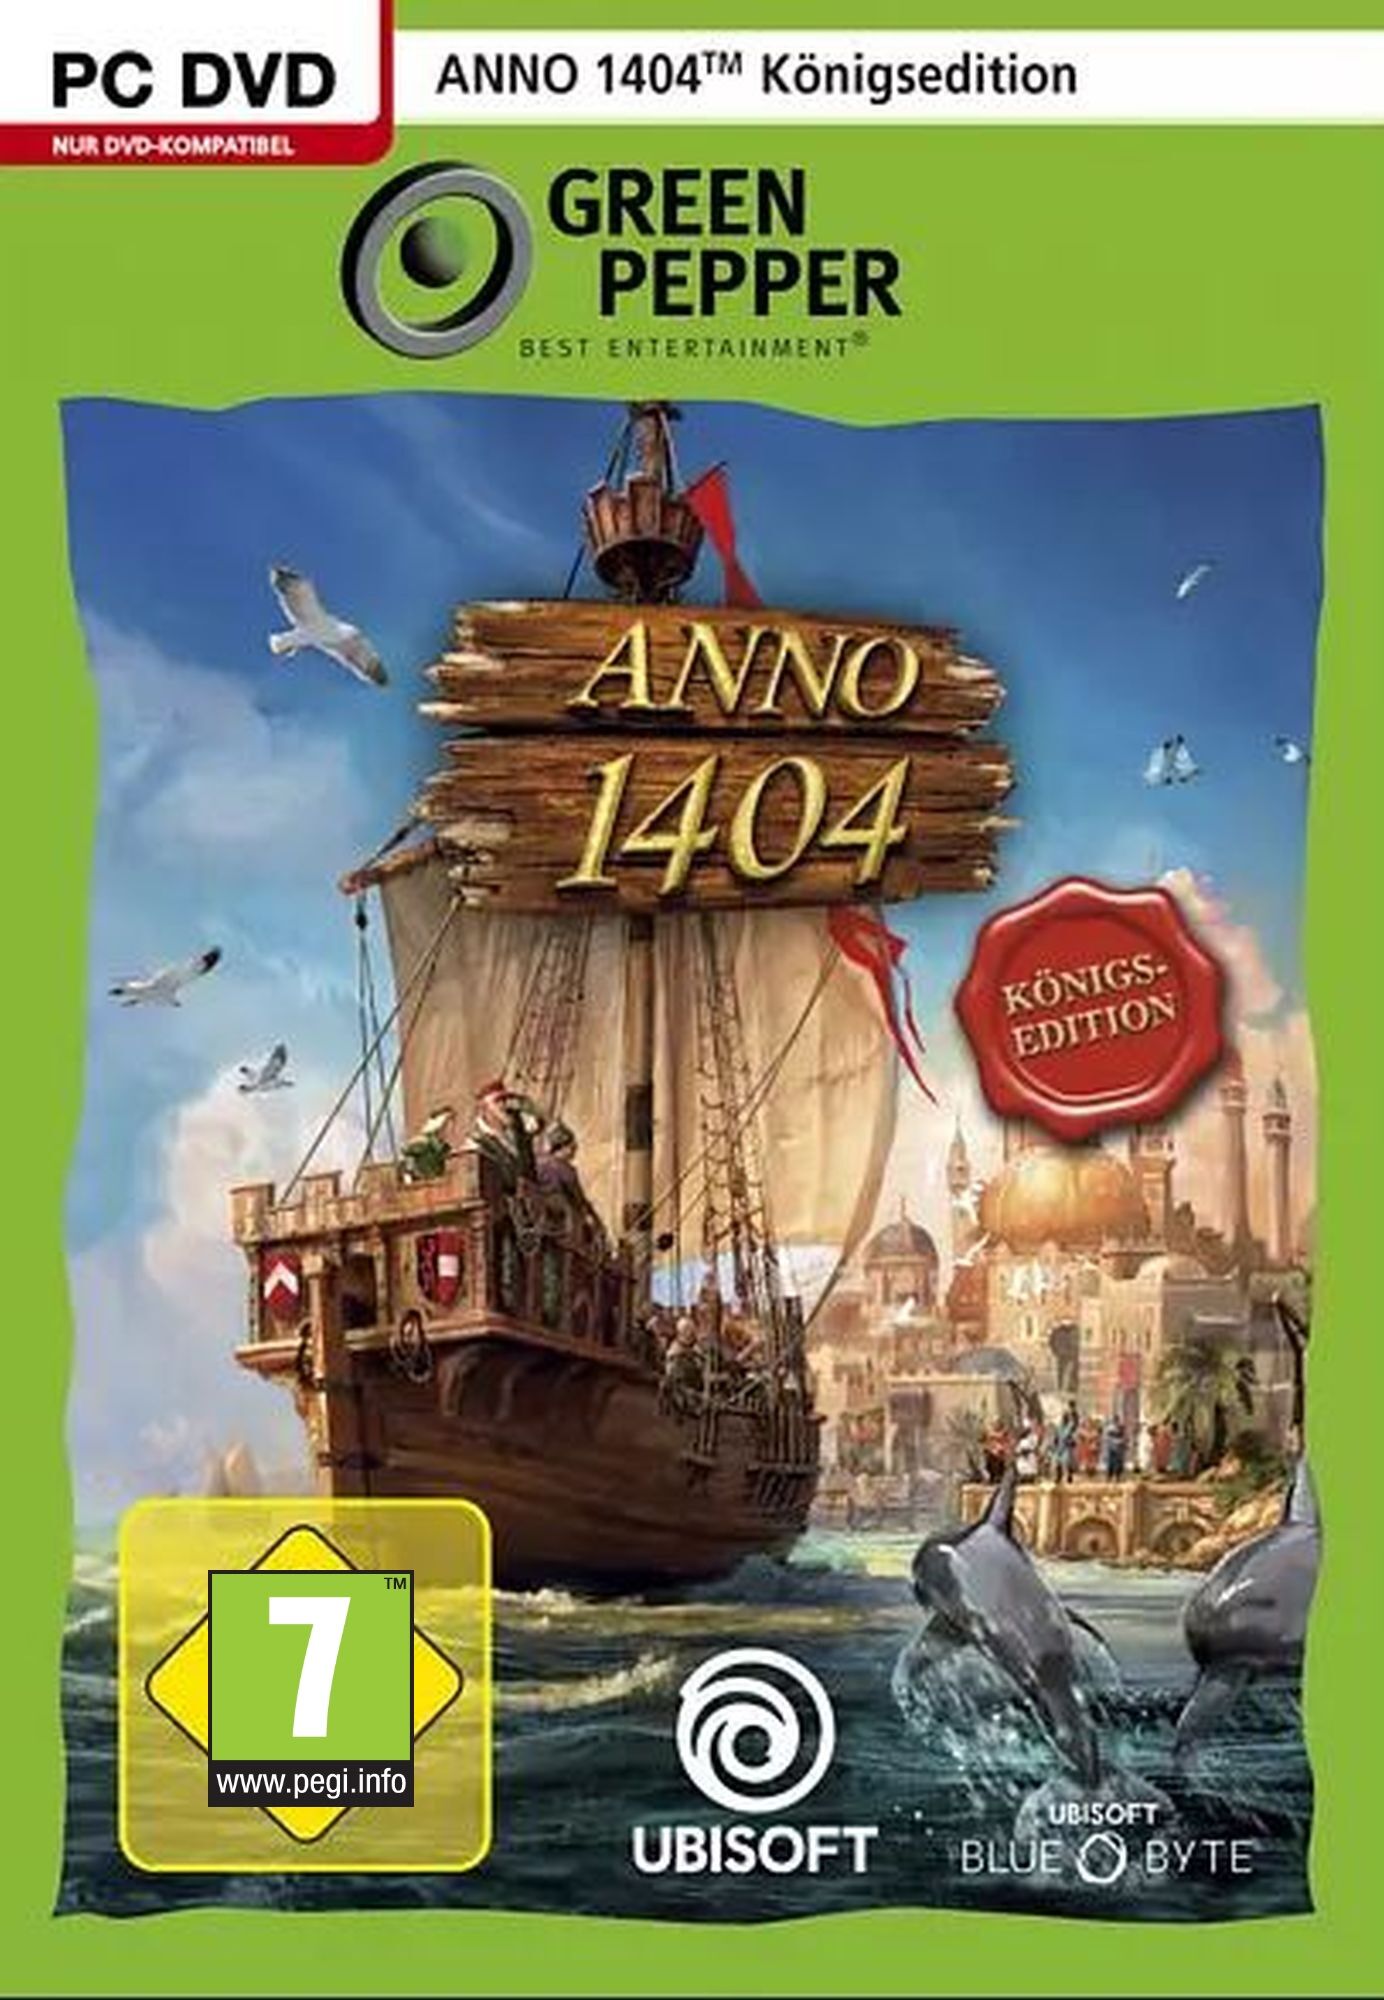 Ubisoft - Green Pepper: Anno 1404 Königsedition [DVD] [PC] (D)